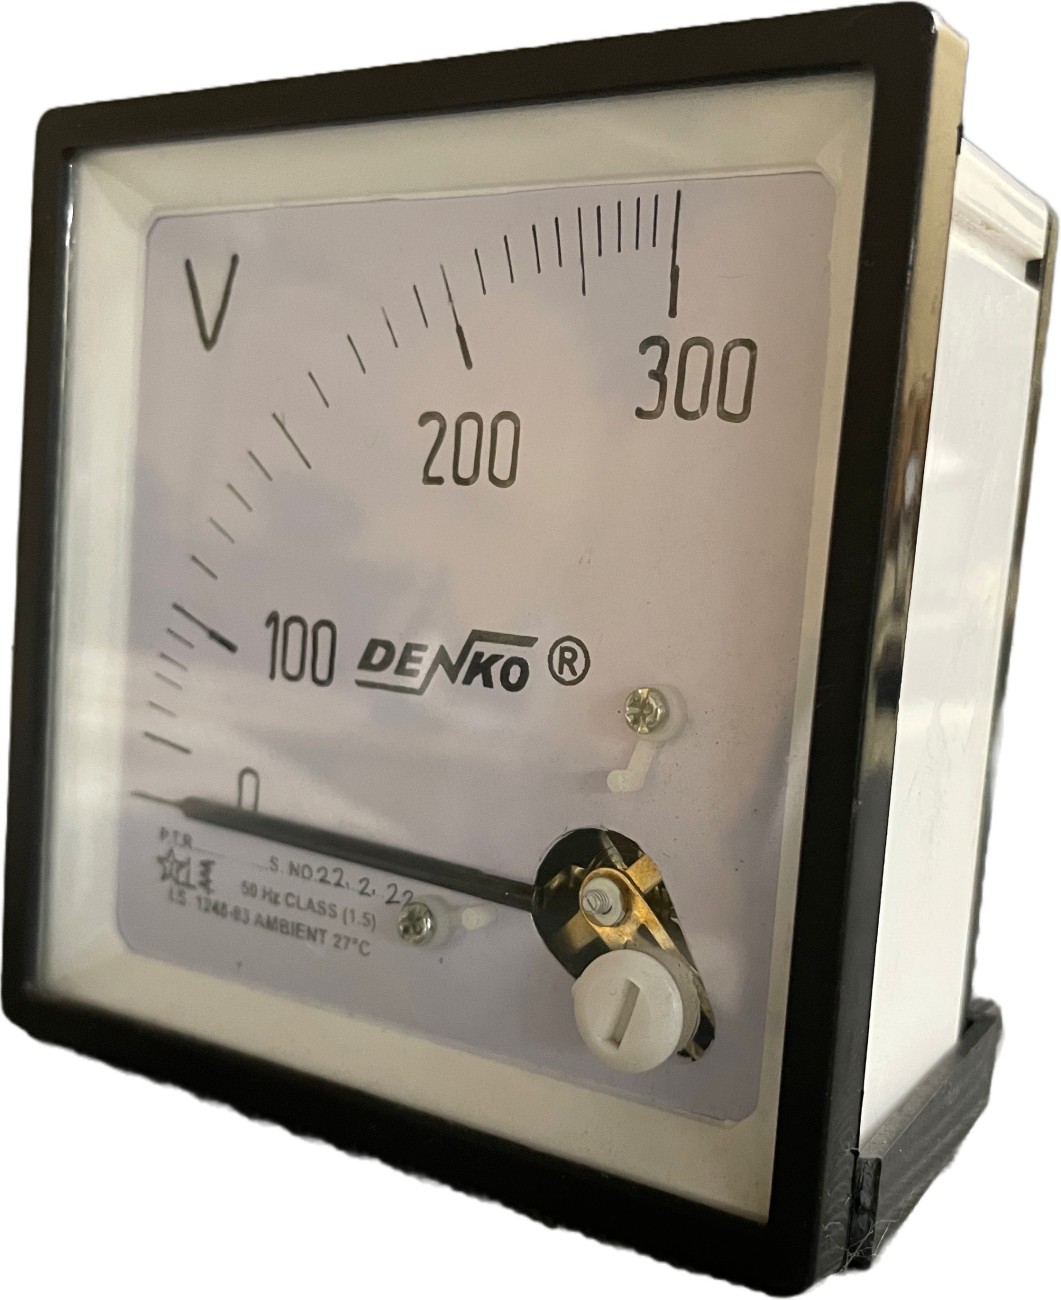 Sidozi AC Voltmeter 300V 96x96 for Panel Mounting Voltmeter Price in India  - Buy Sidozi AC Voltmeter 300V 96x96 for Panel Mounting Voltmeter online at